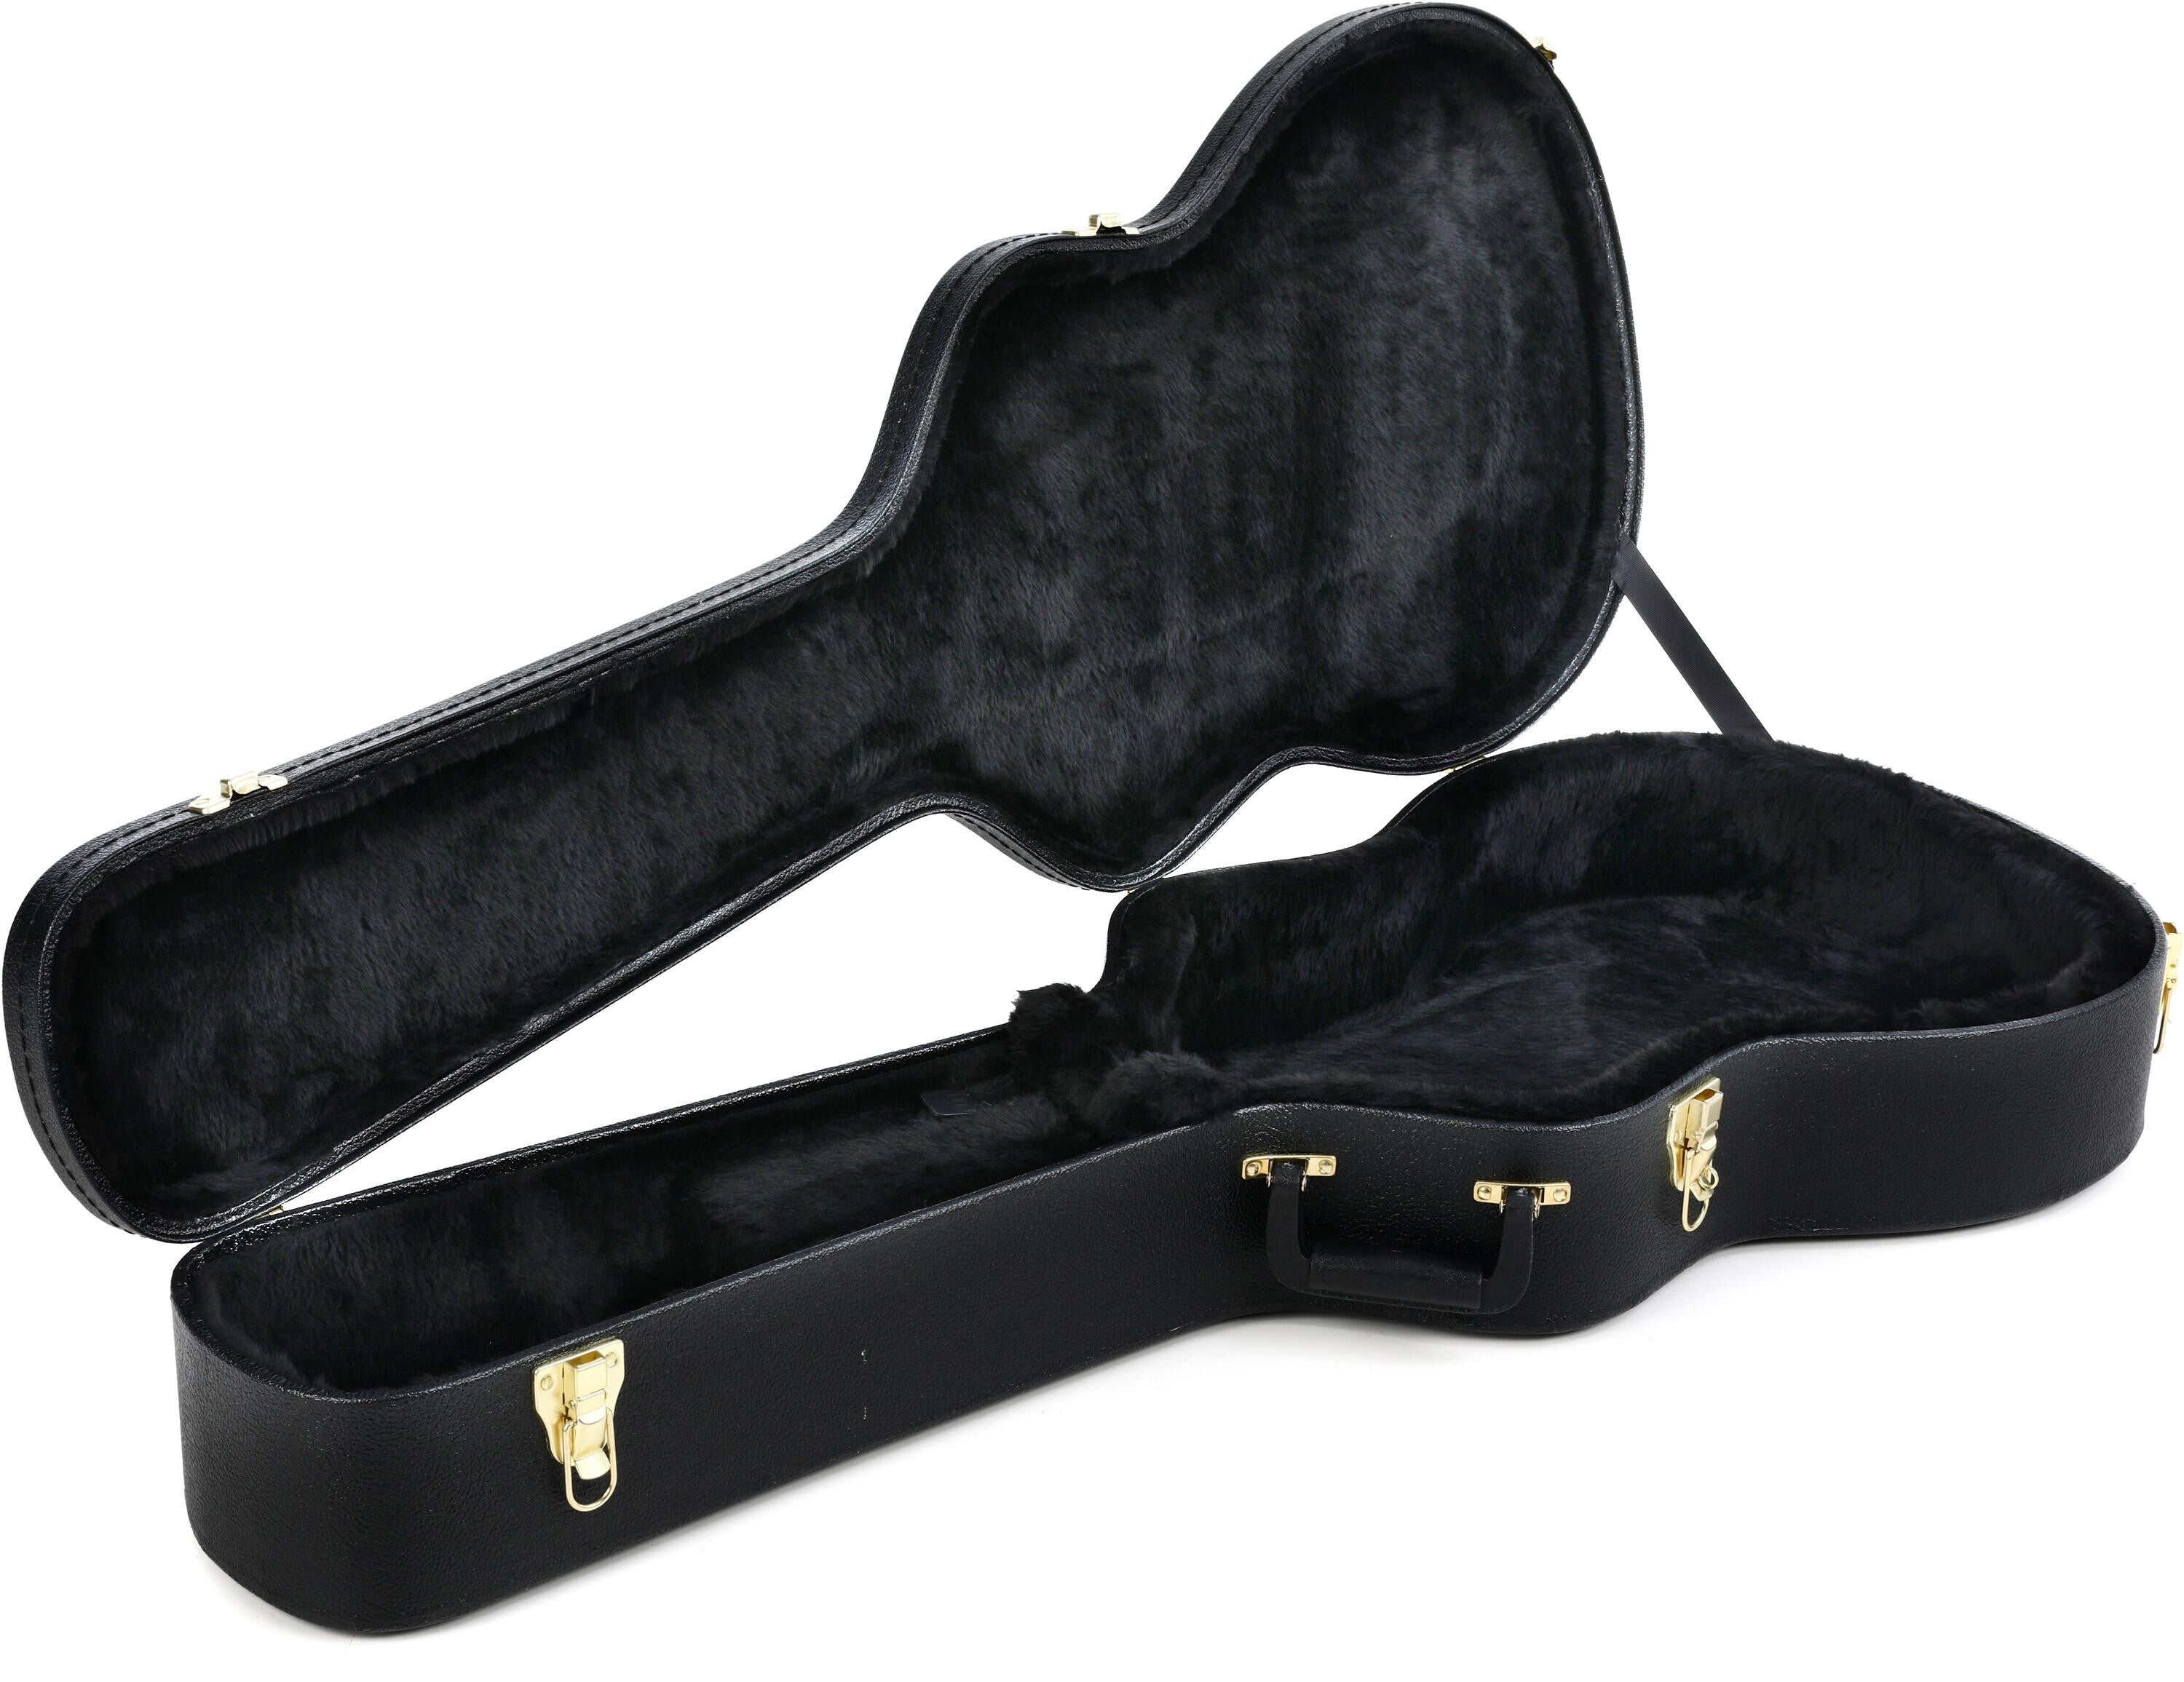 Fender Classical/Folk Guitar Multi-Fit Hardshell Case - Black with 